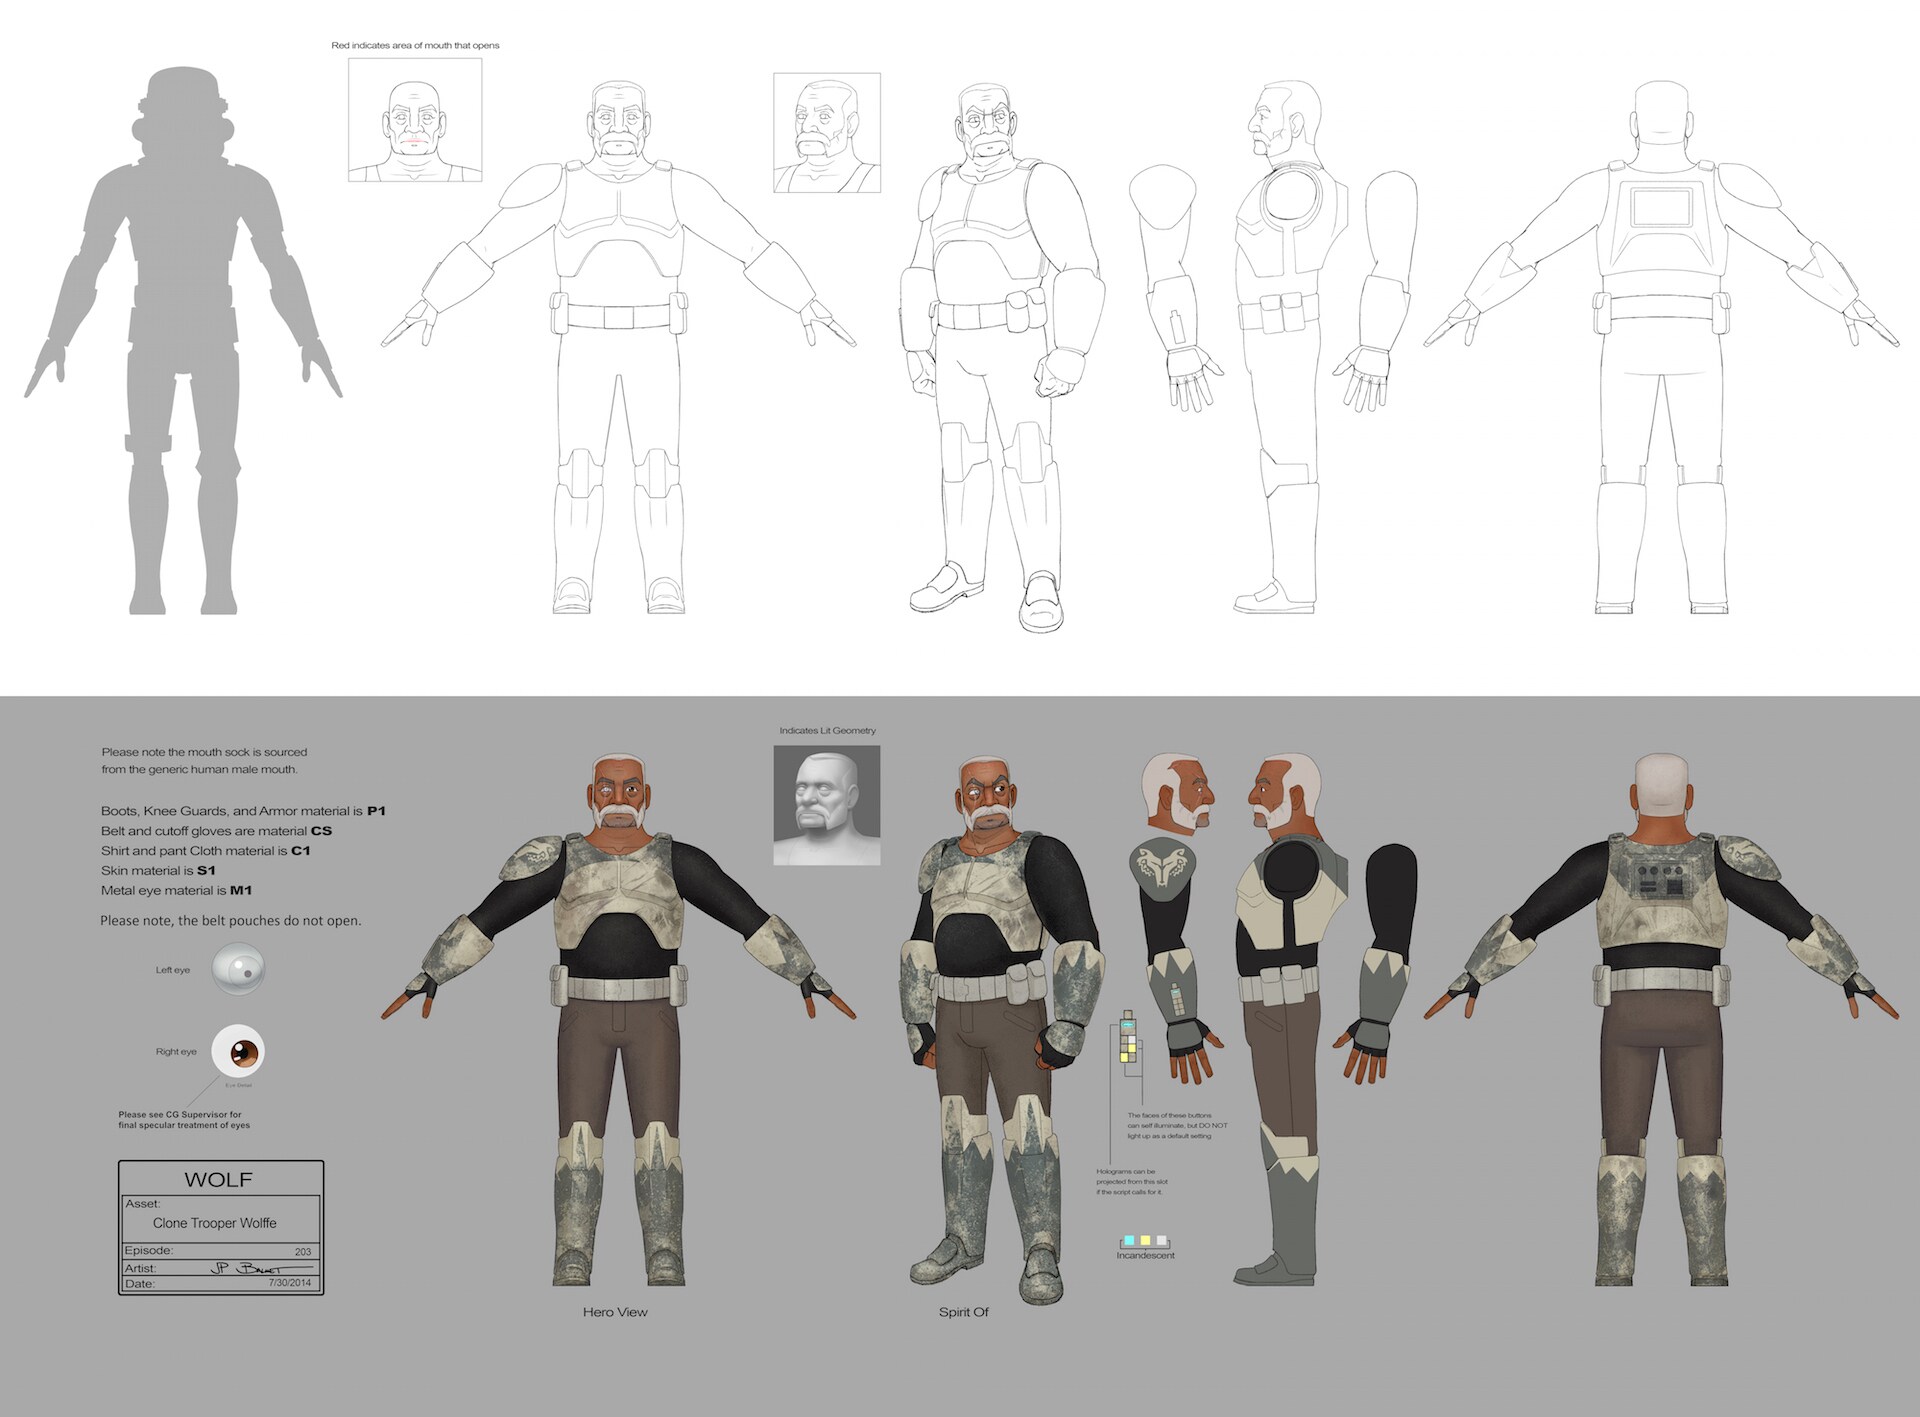 Clone Trooper Wolffe full character illustration by JP Balmet. 